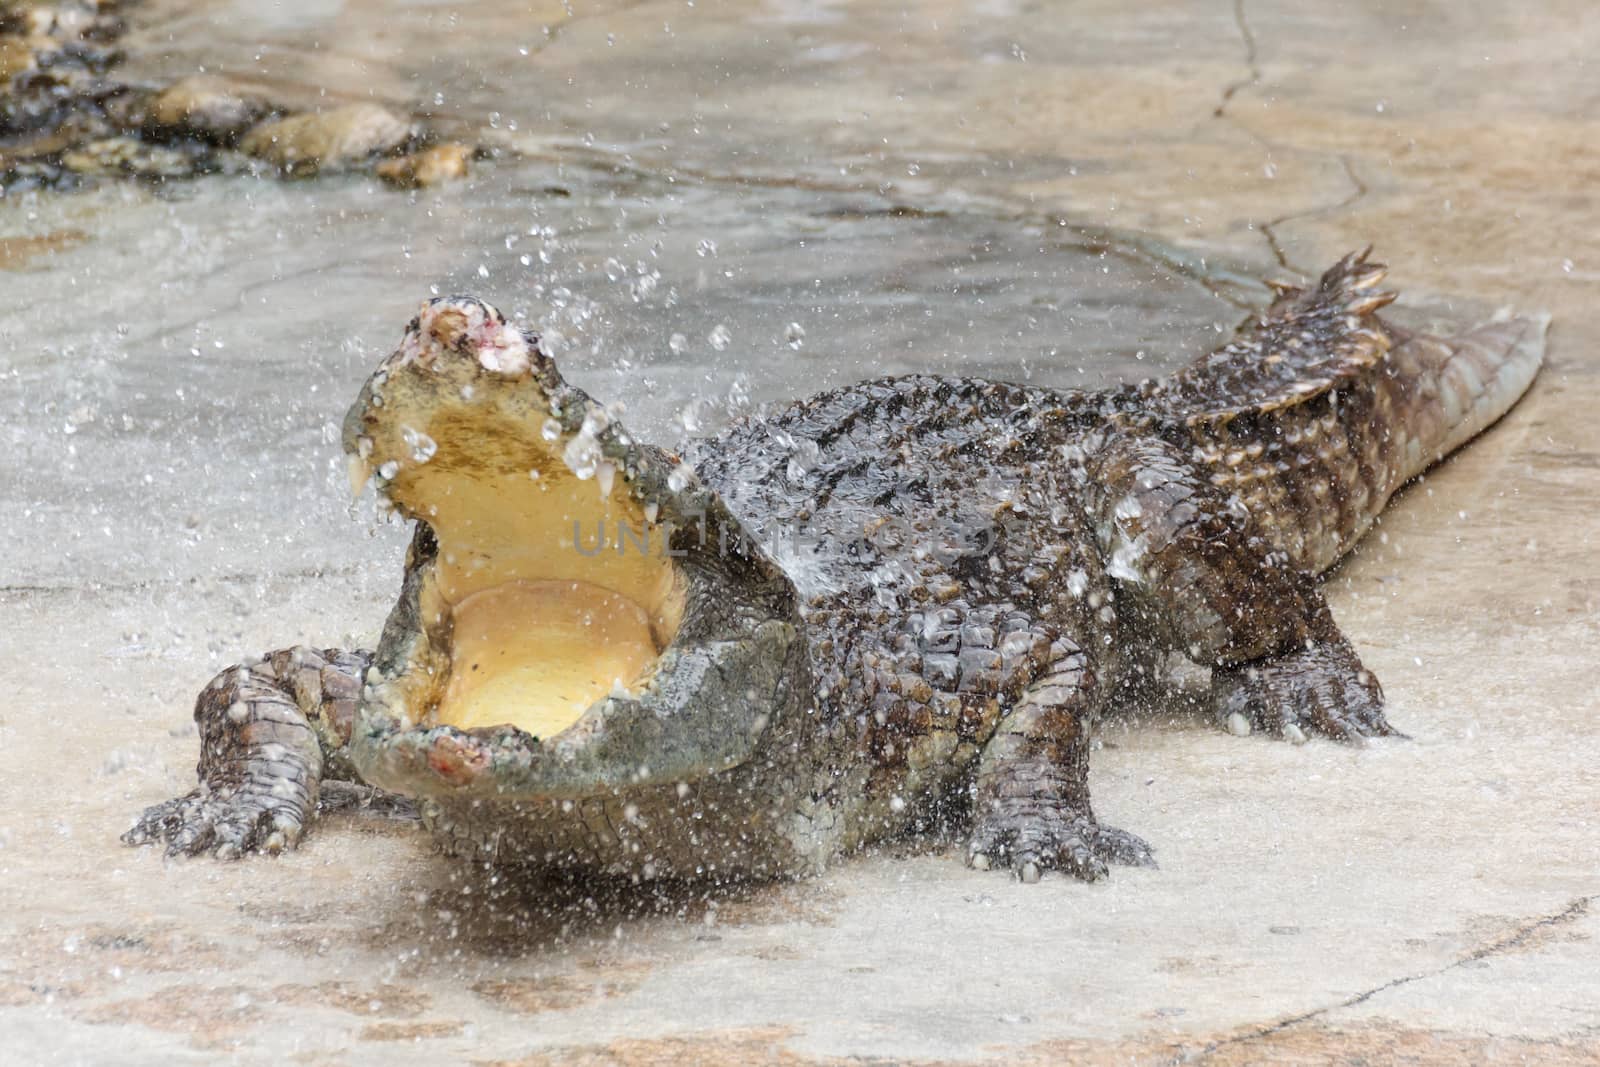 Crocodile with spray water  by vitawin